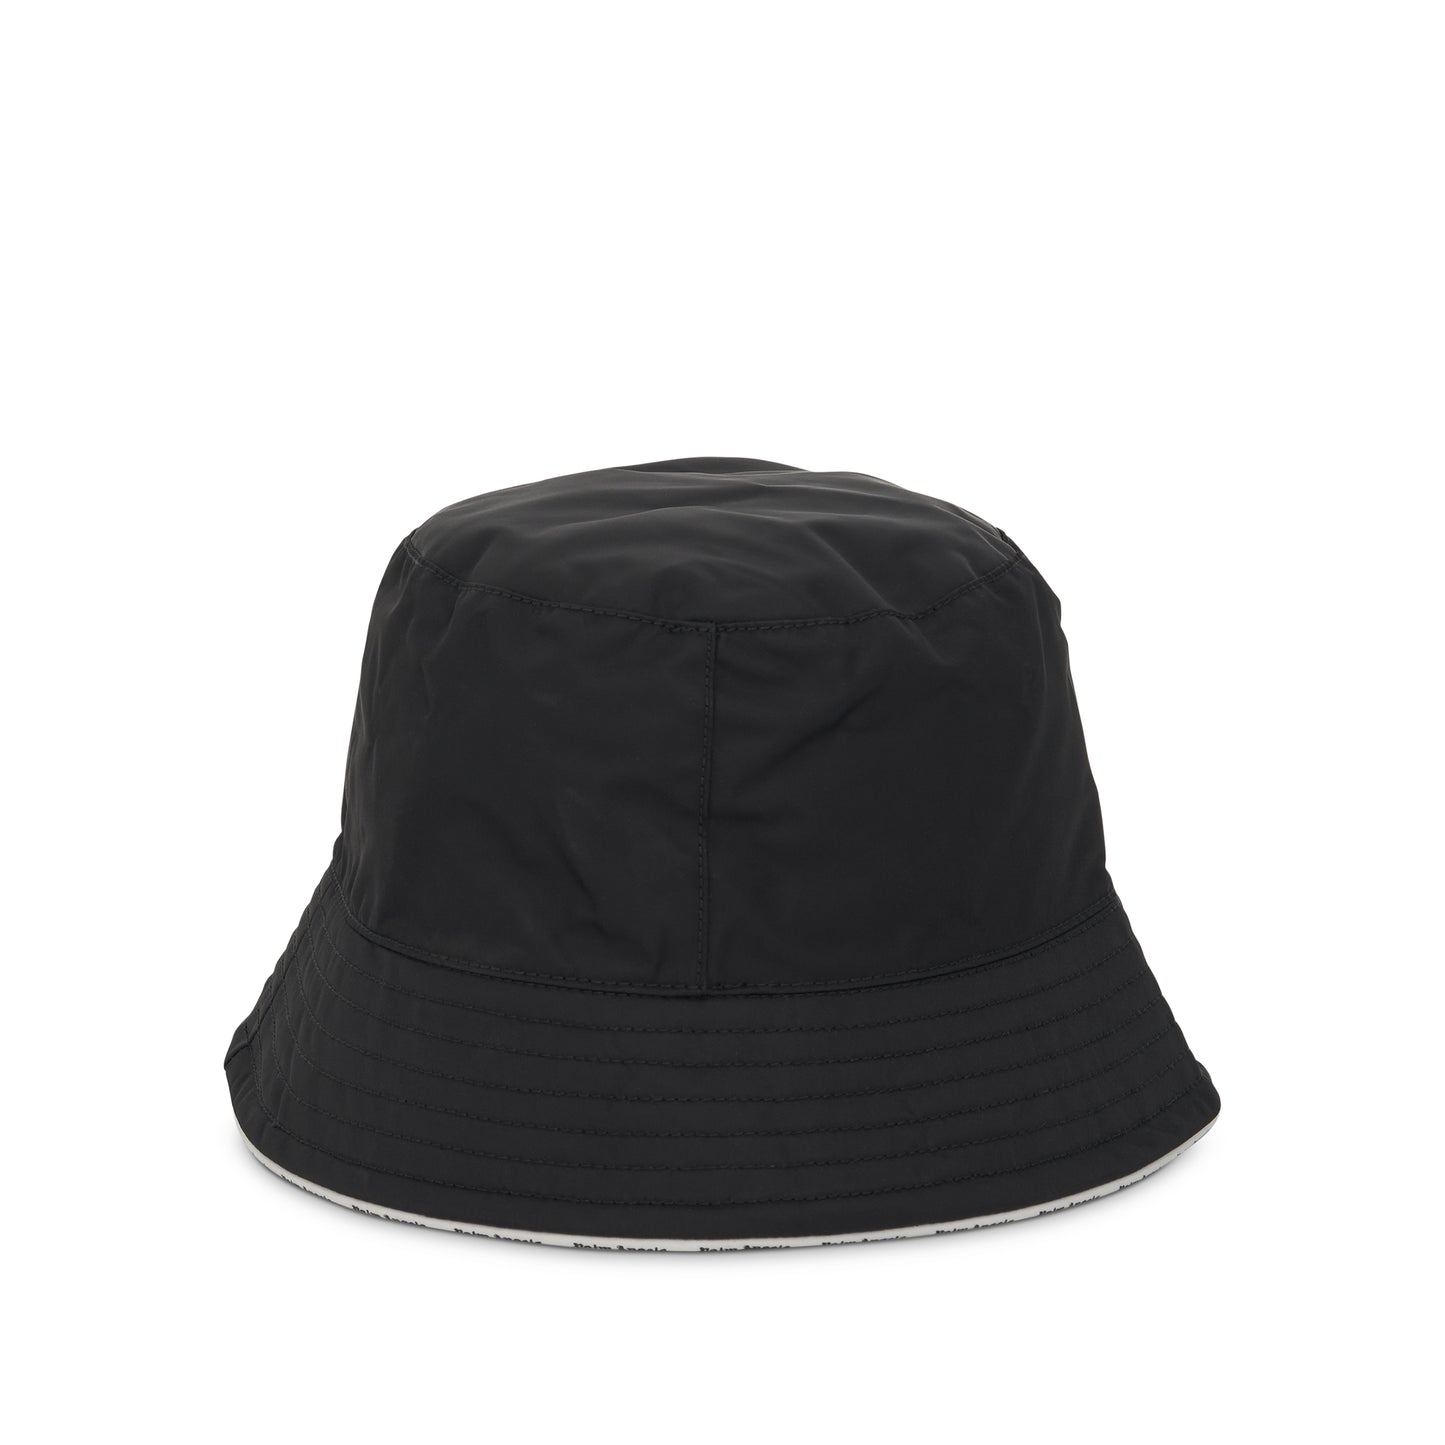 Bear Bucket Hat in Black/Brown